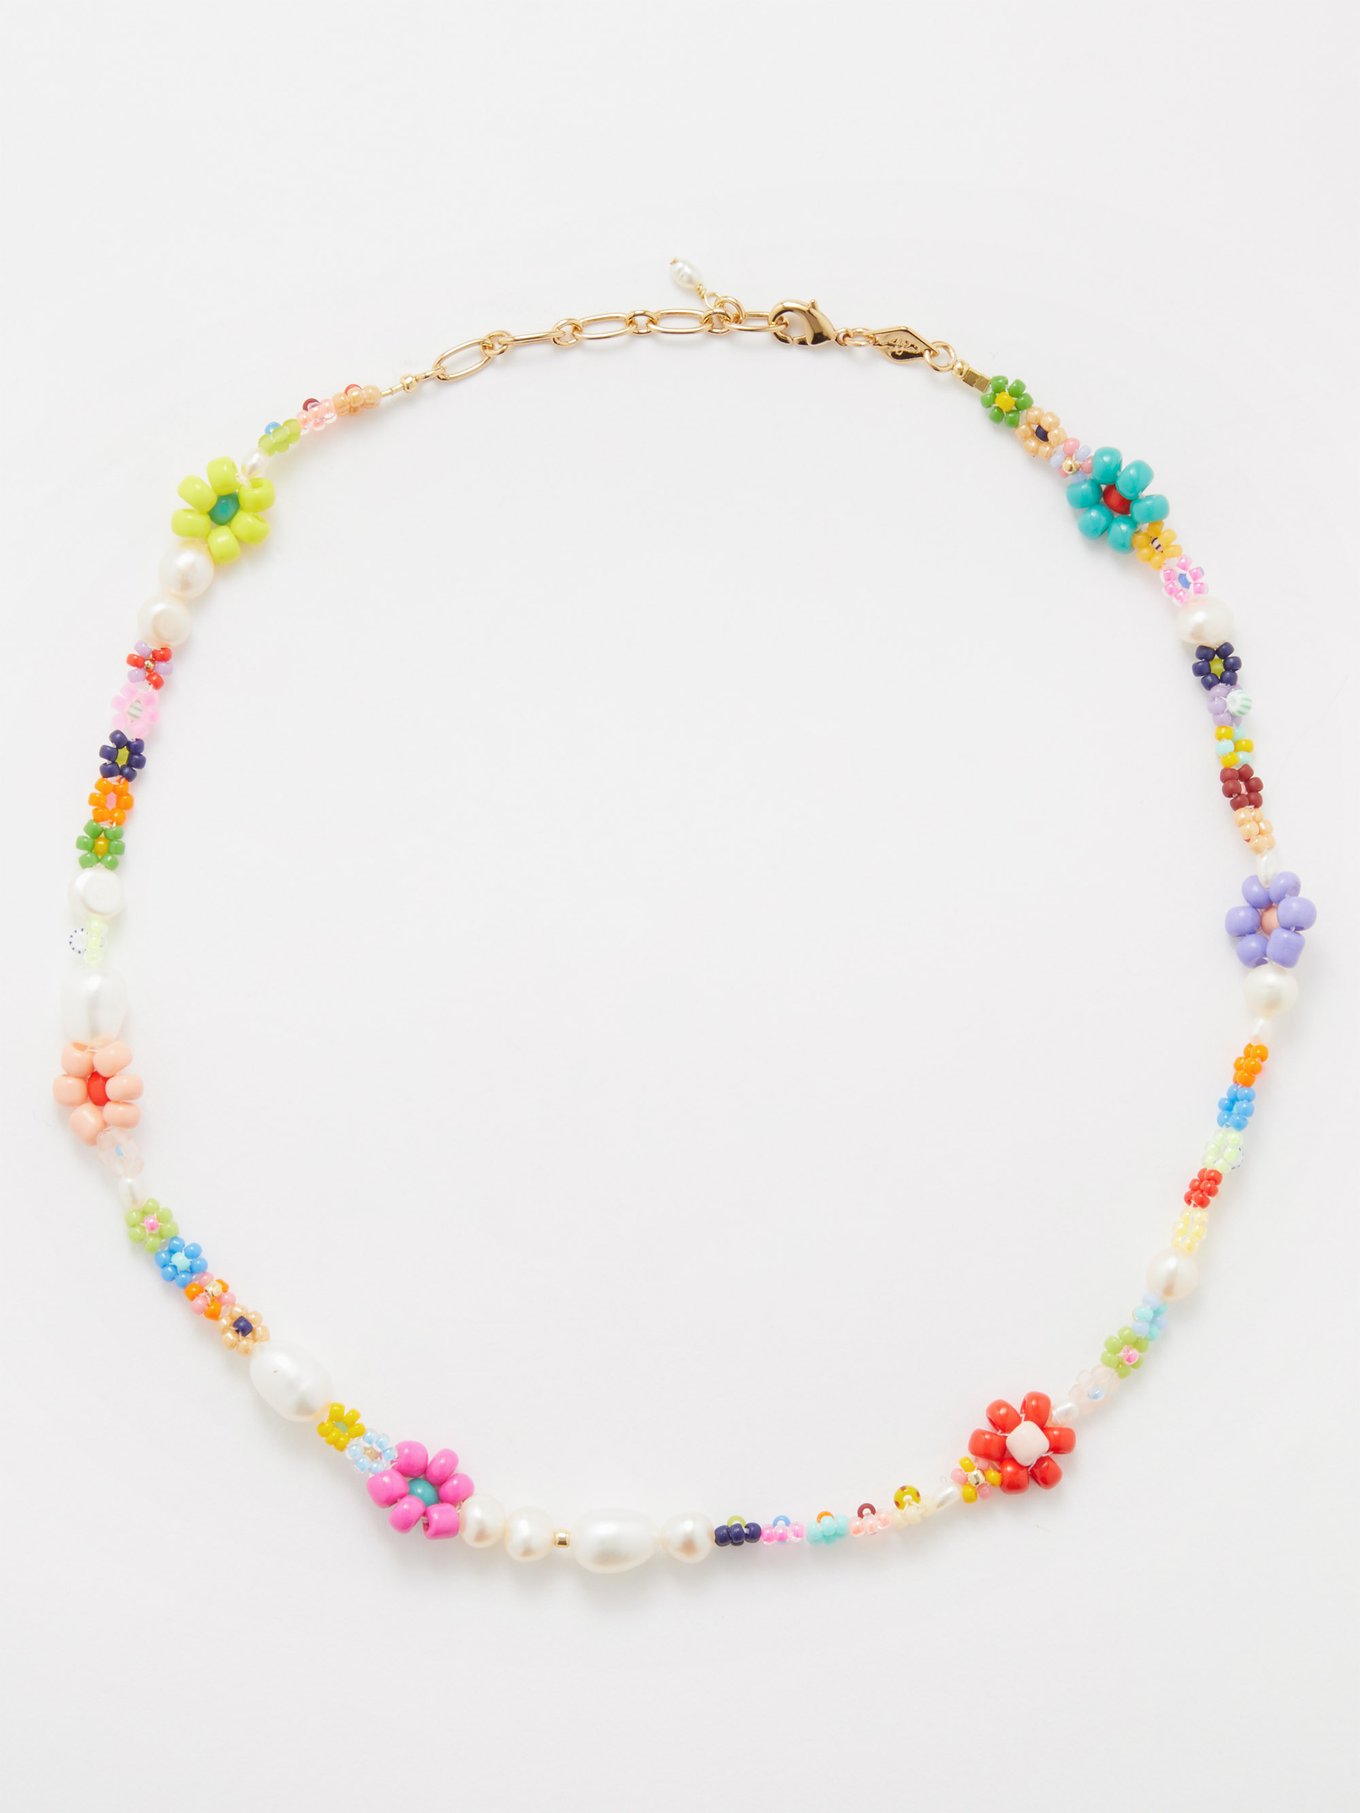 How to Make Flower Bead Bracelet (Daisy Chain Bracelet) | The Craftaholic  Witch